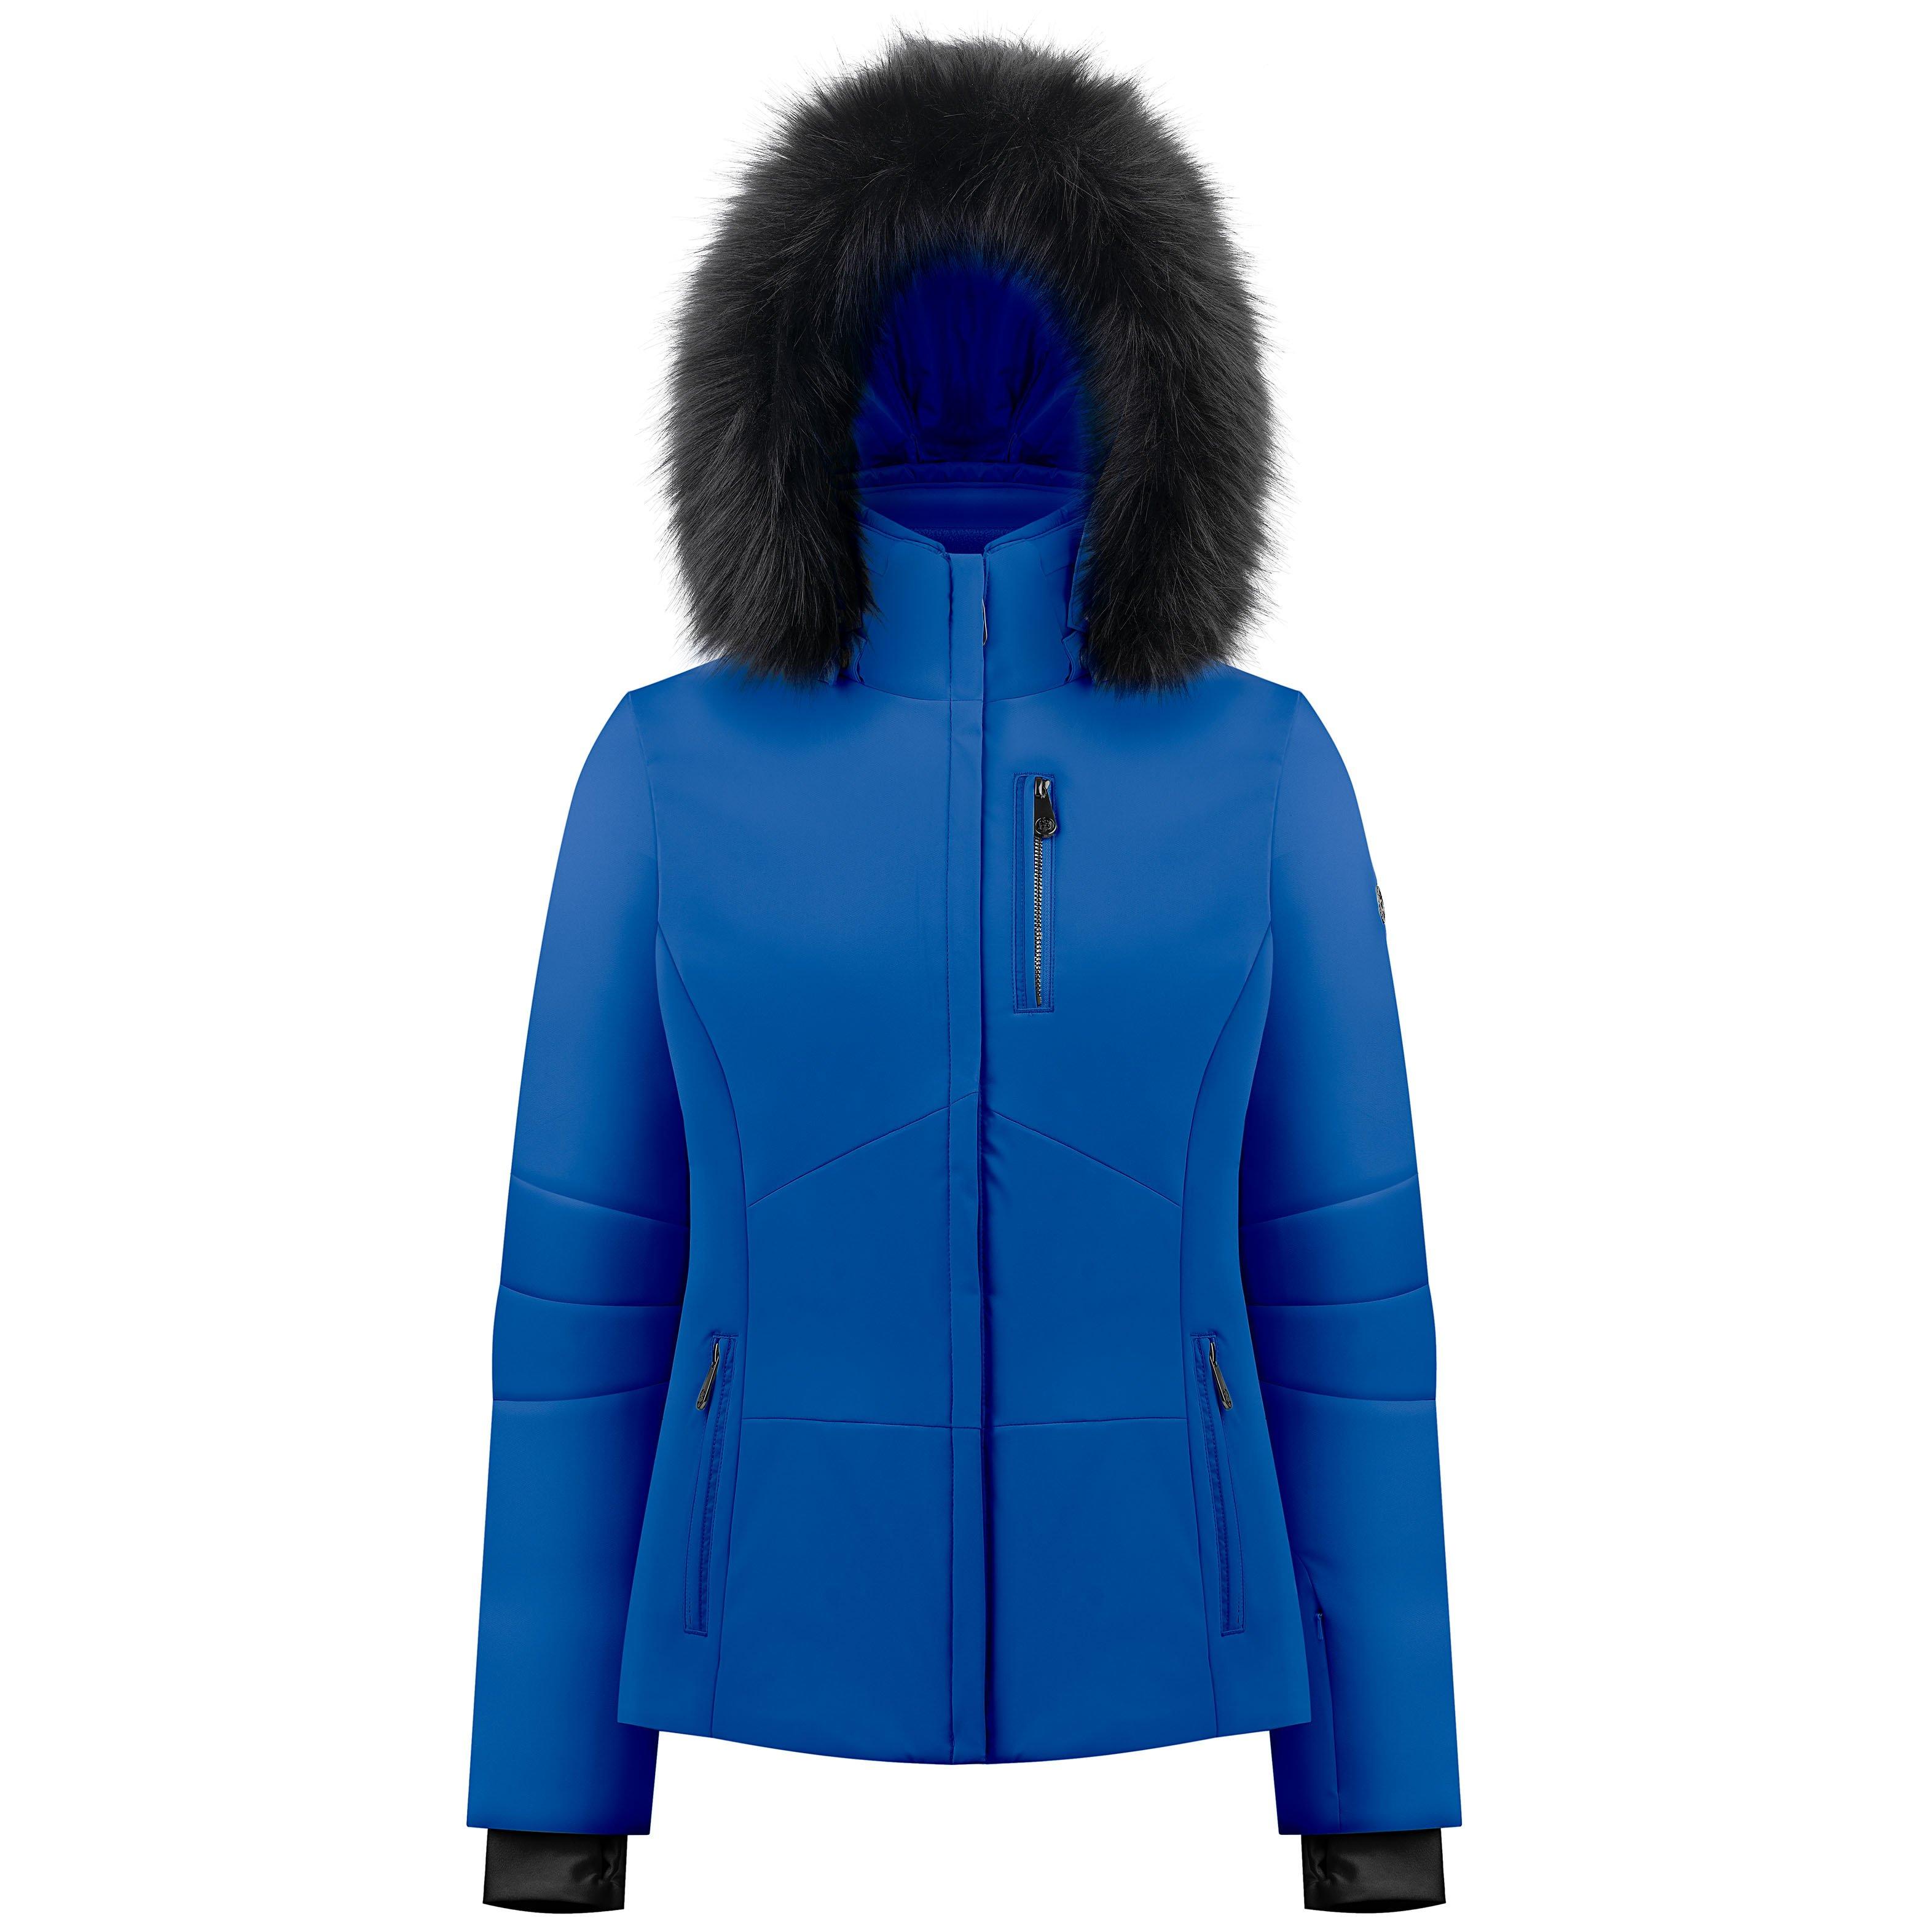 Poivre Blanc Women's Stretch Ski Jacket - Infinity Blue